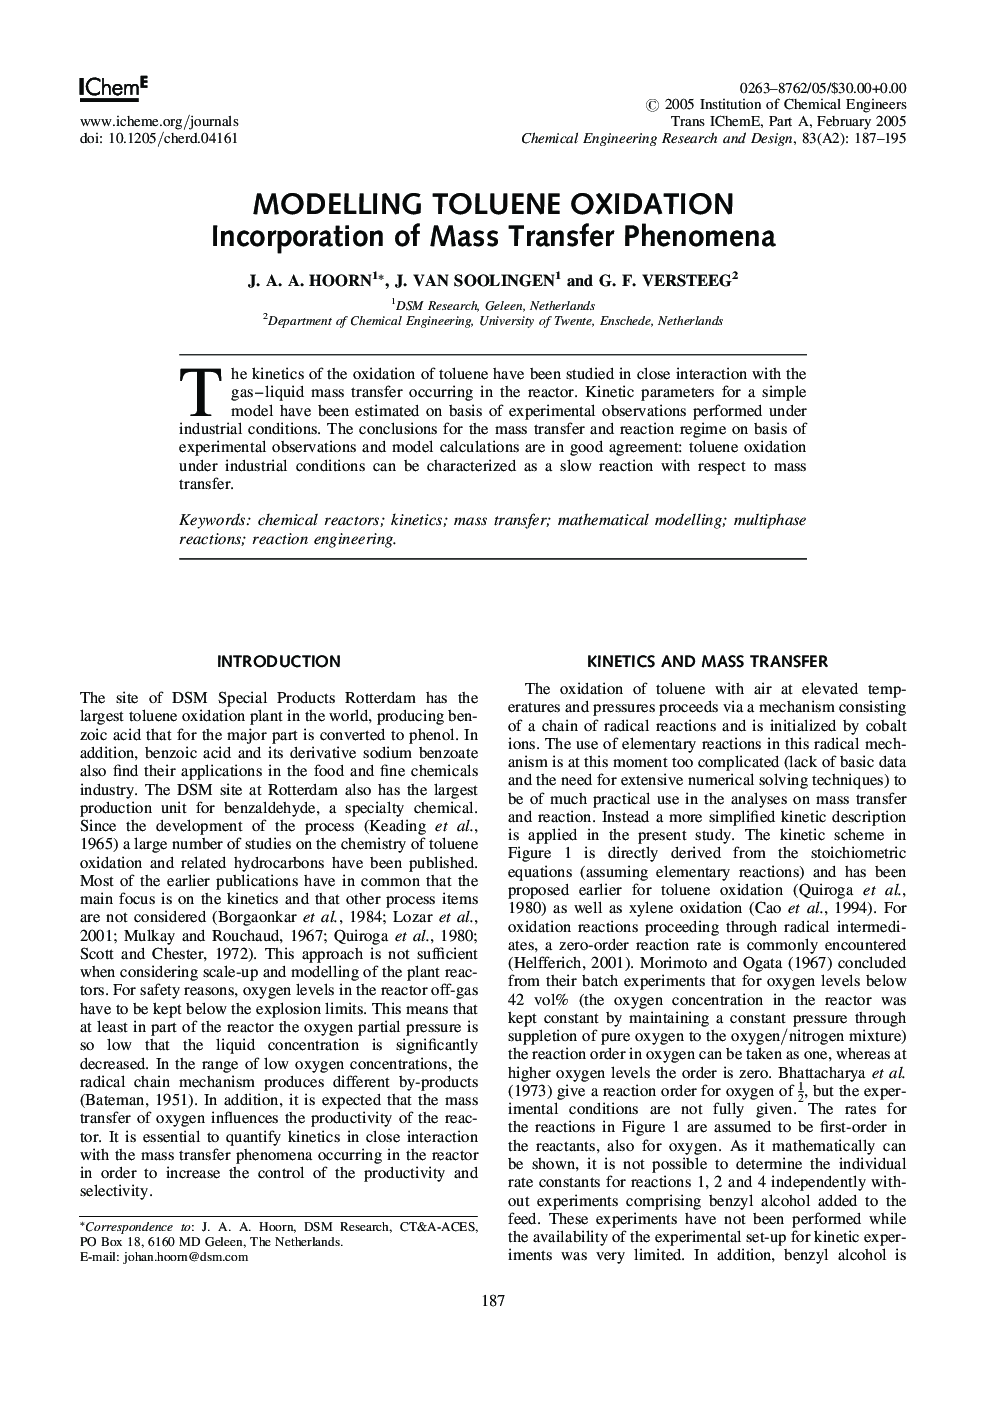 Modelling Toluene Oxidation: Incorporation of Mass Transfer Phenomena